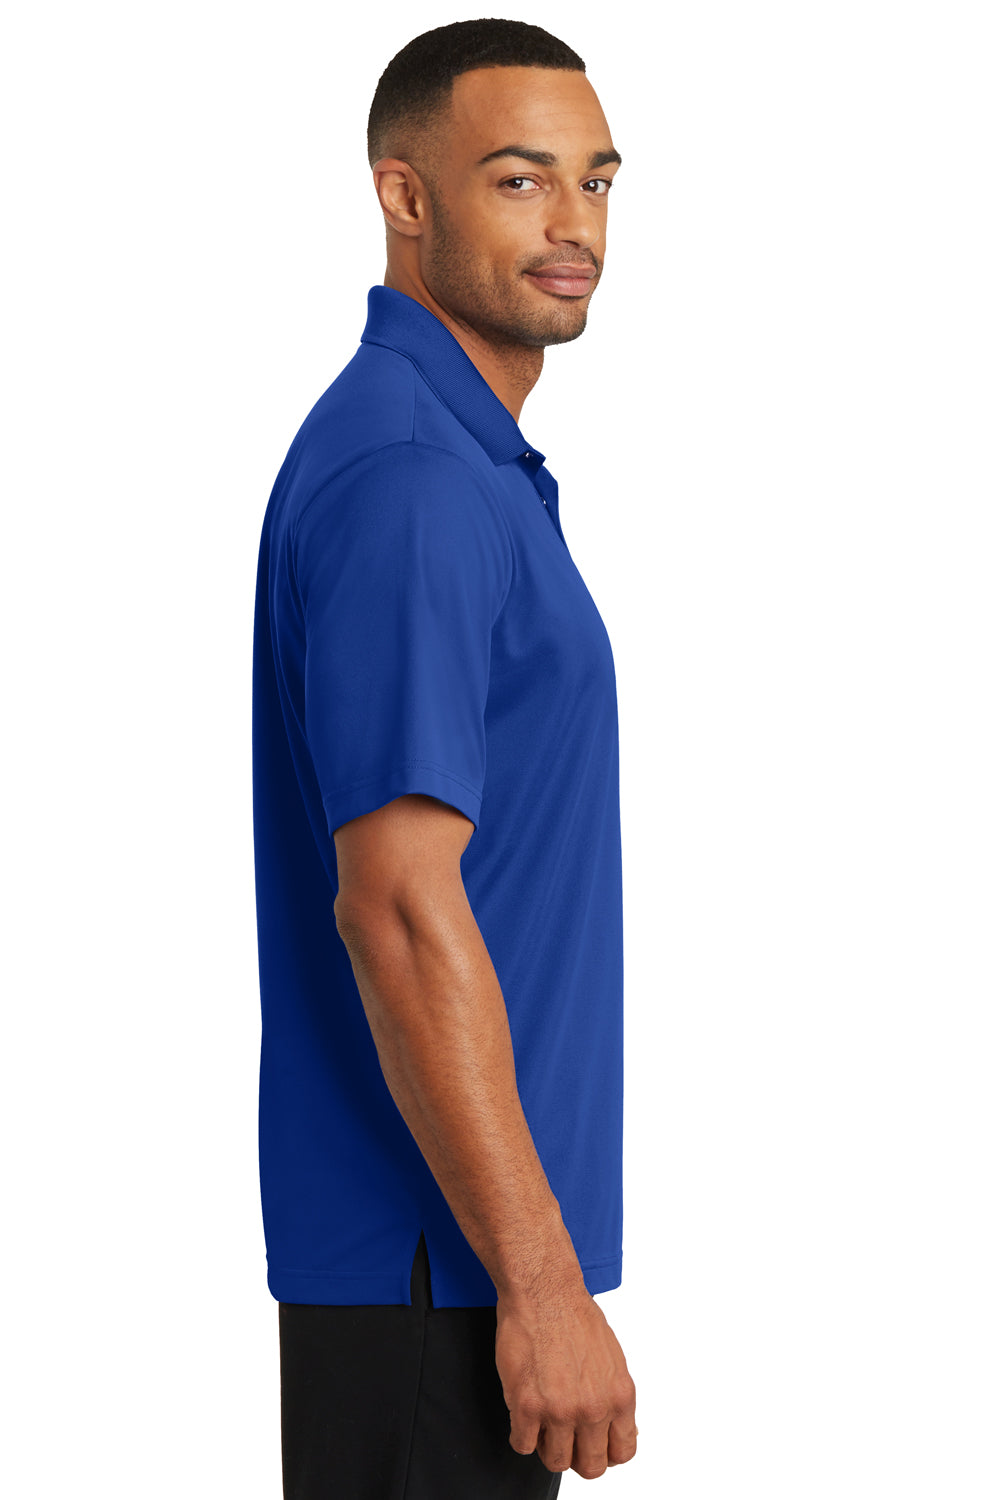 CornerStone CS421 Mens Gripper Moisture Wicking Short Sleeve Polo Shirt Royal Blue Side